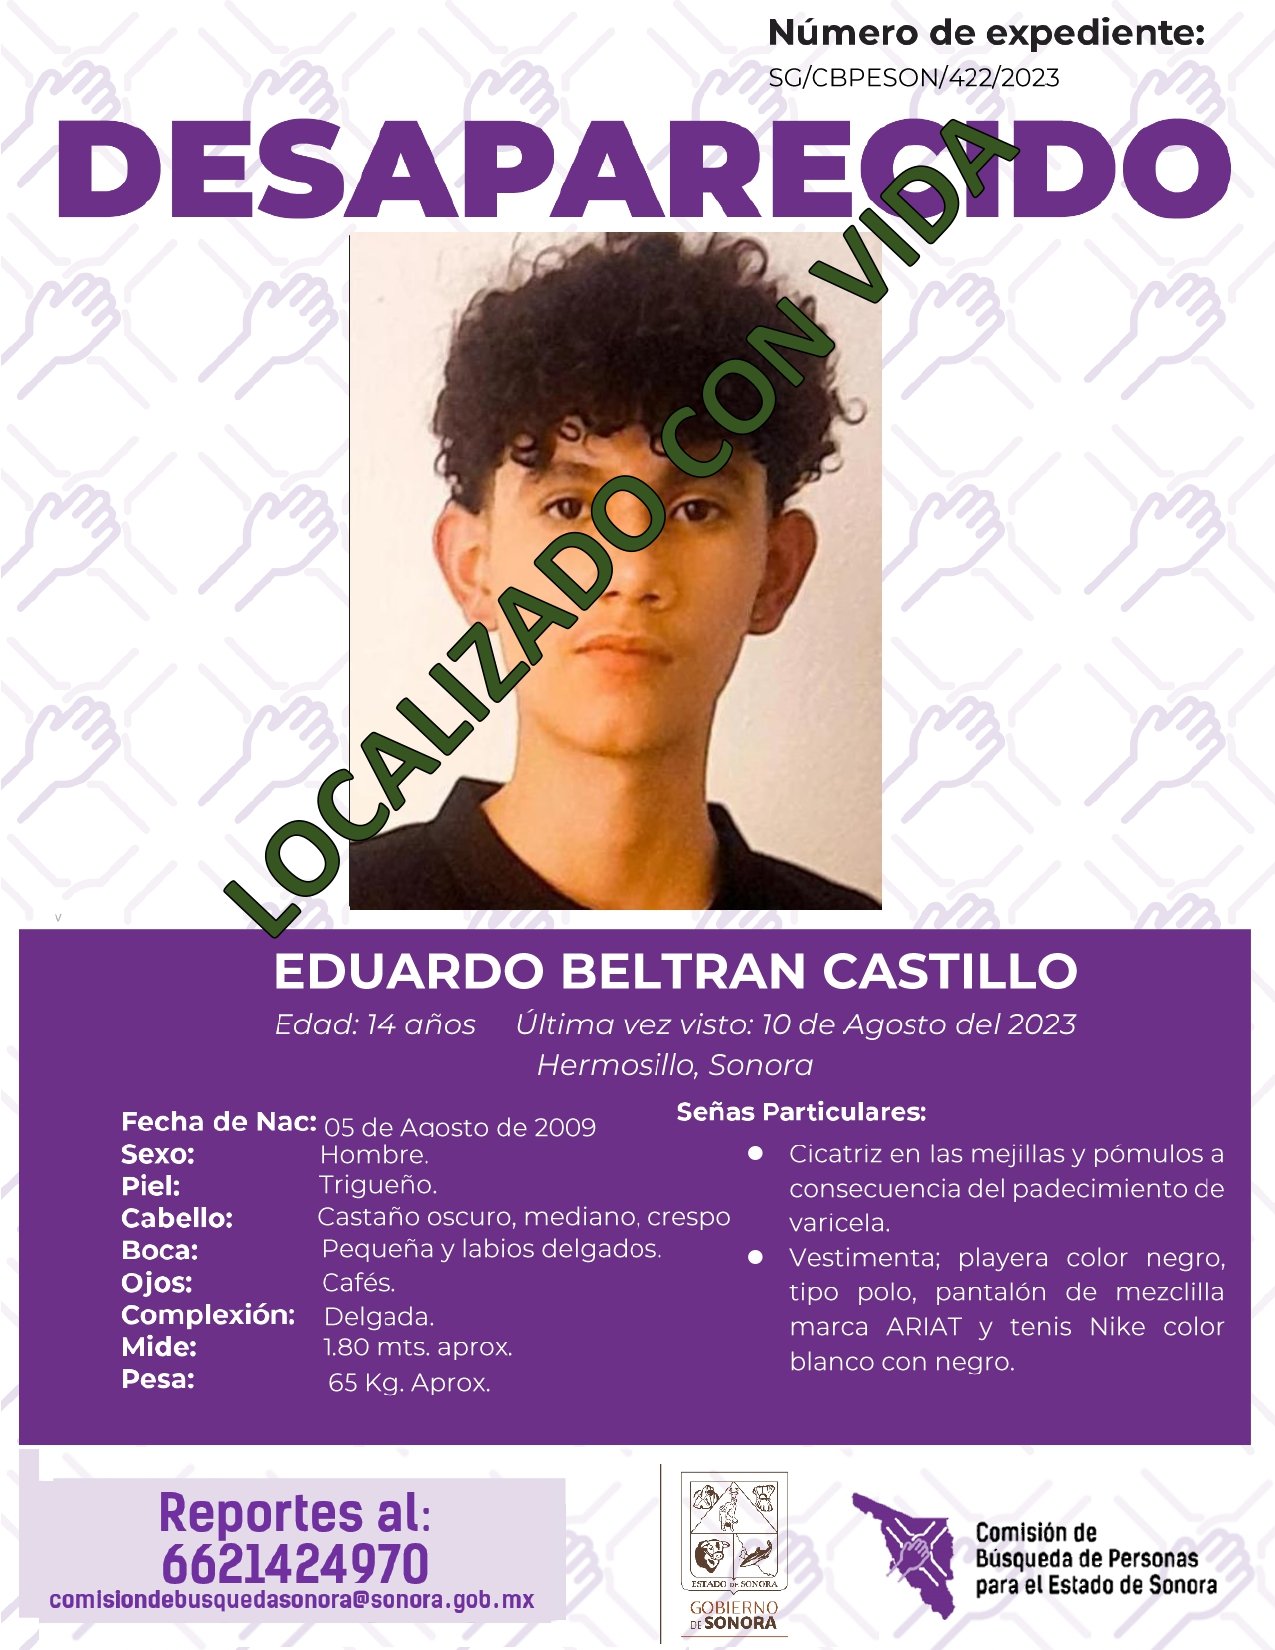 EDUARDO BELTRAN CASTILLO - LOCALIZADO CON VIDA